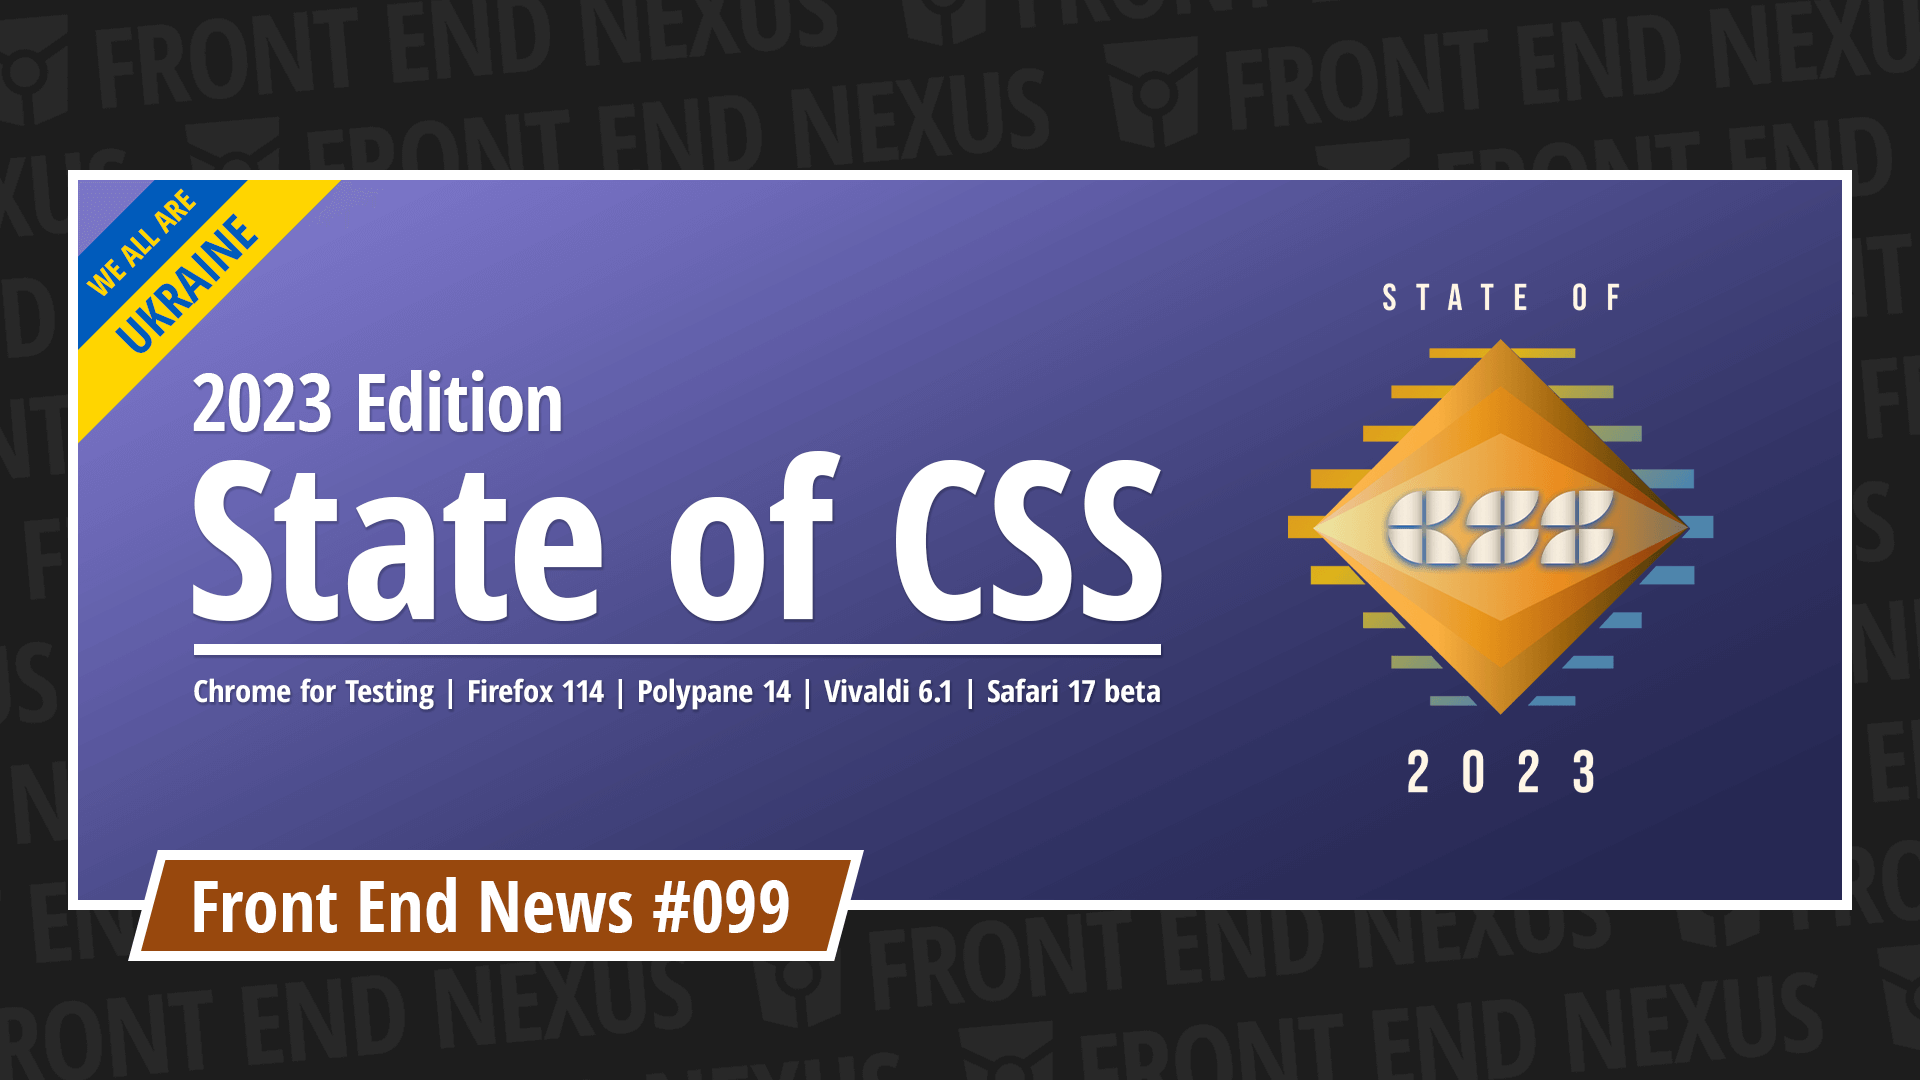 State of CSS 2023, Chrome for Testing, Firefox 114, Polypane 14, Vivaldi 6.1, Safari 17 beta, and more | Front End News #099